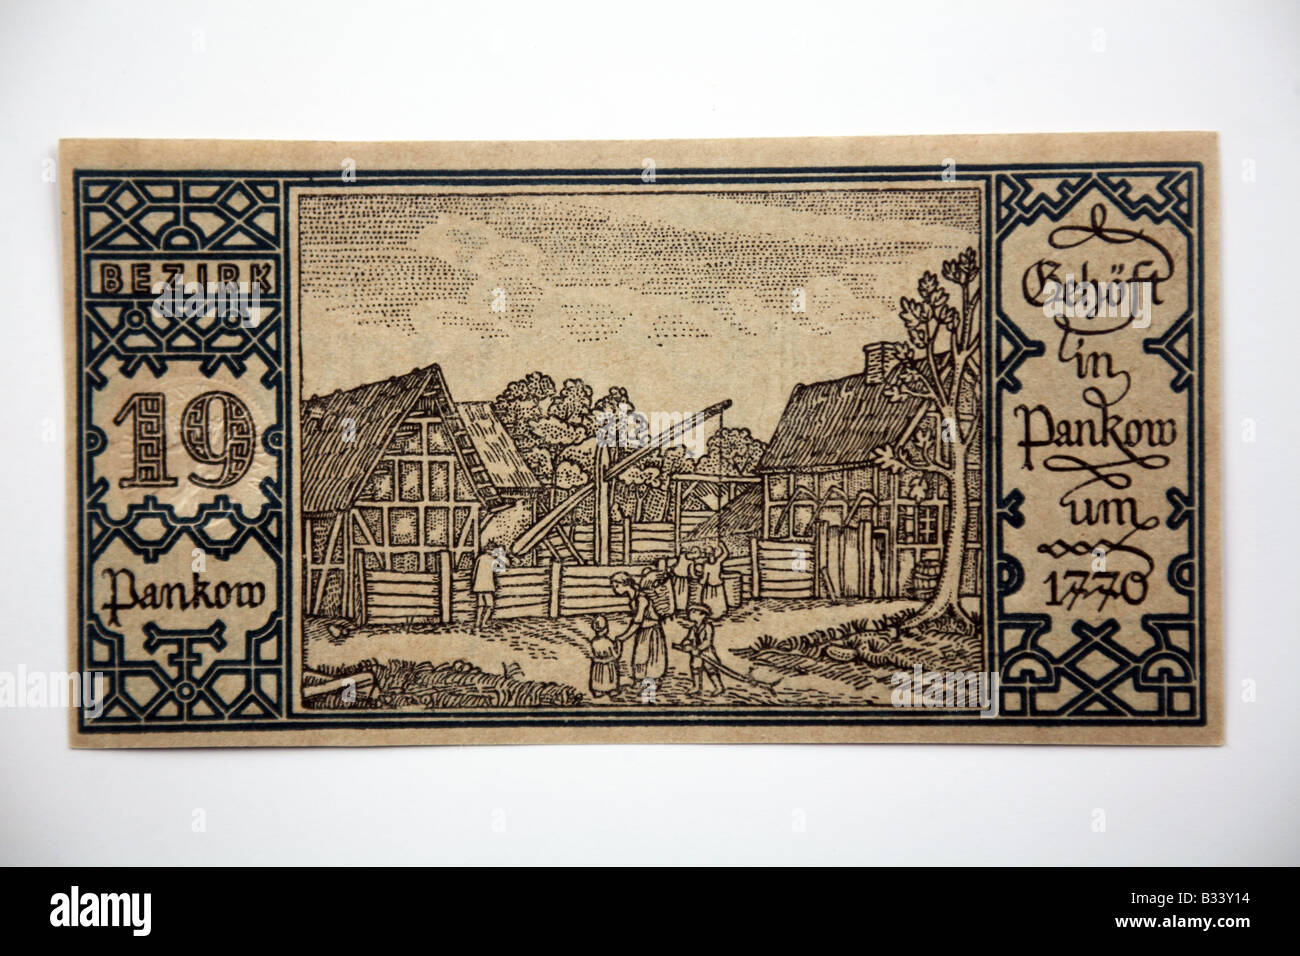 1921 BERLIN NOTGELD German Banknote. 19) Planhow - Farm in 1770. Stock Photo